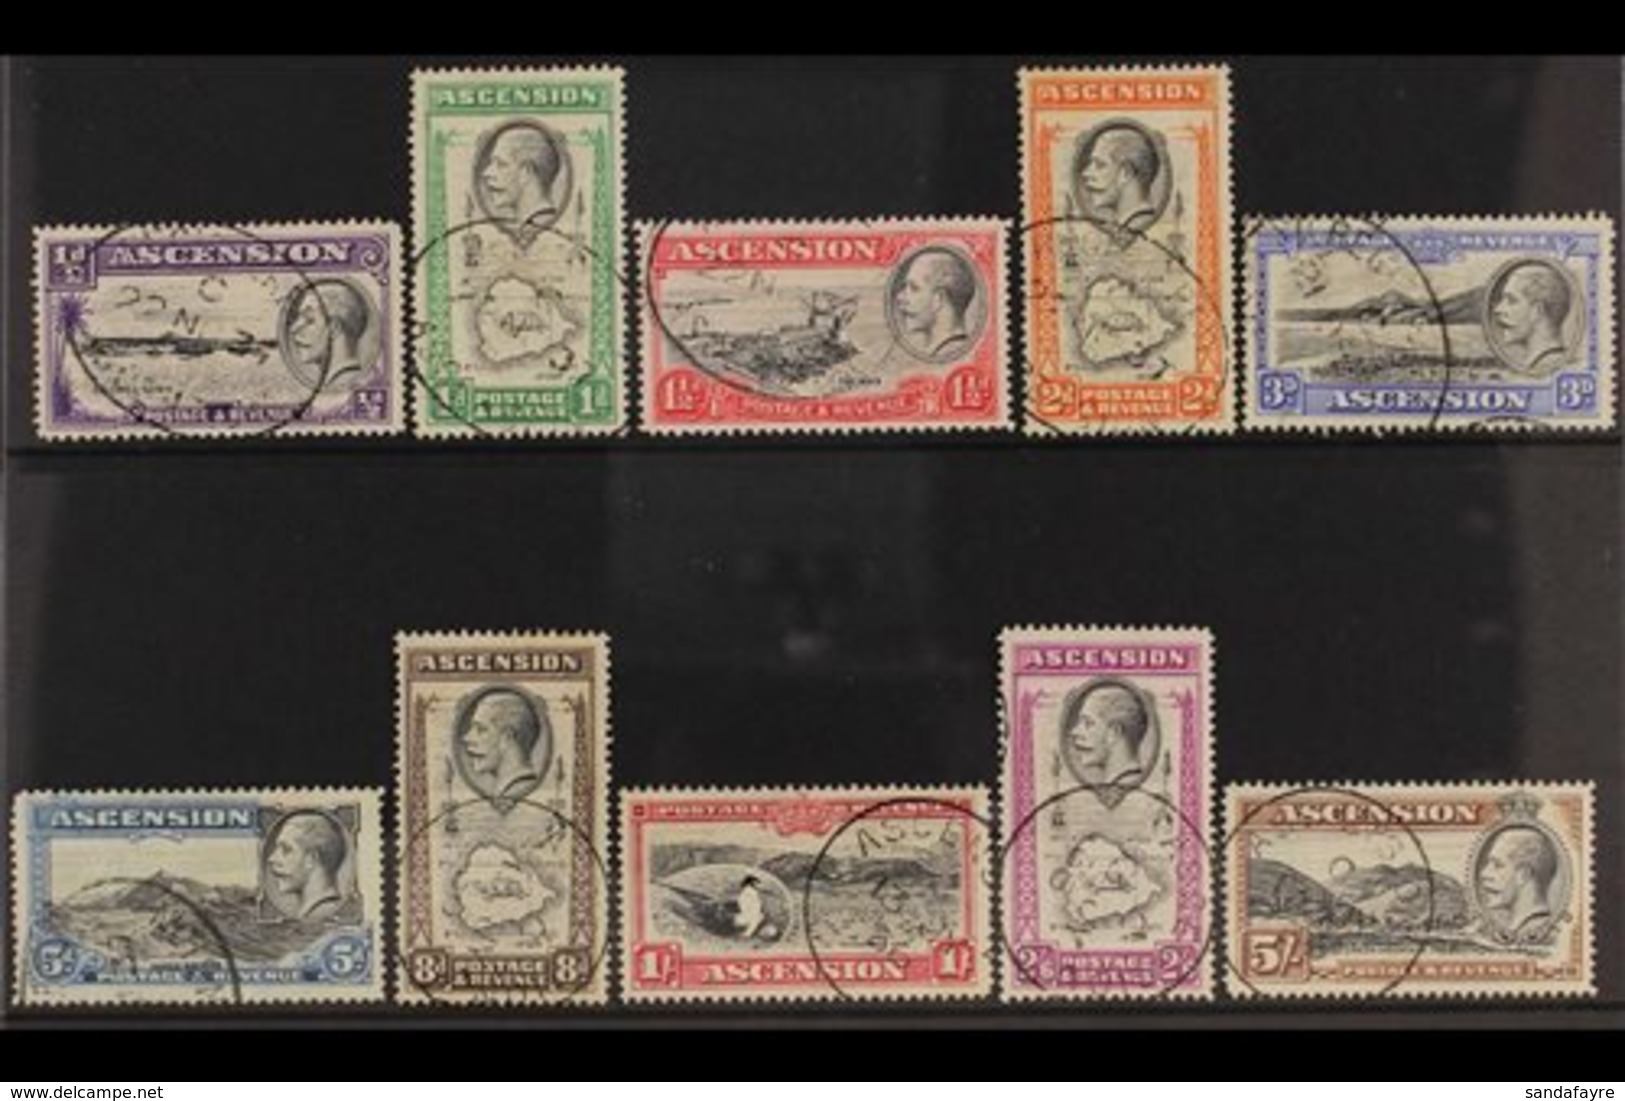 1934 KGV Pictorial Definitive Set, SG 21/30, Fine Cds Used (10 Stamps) For More Images, Please Visit Http://www.sandafay - Ascensión